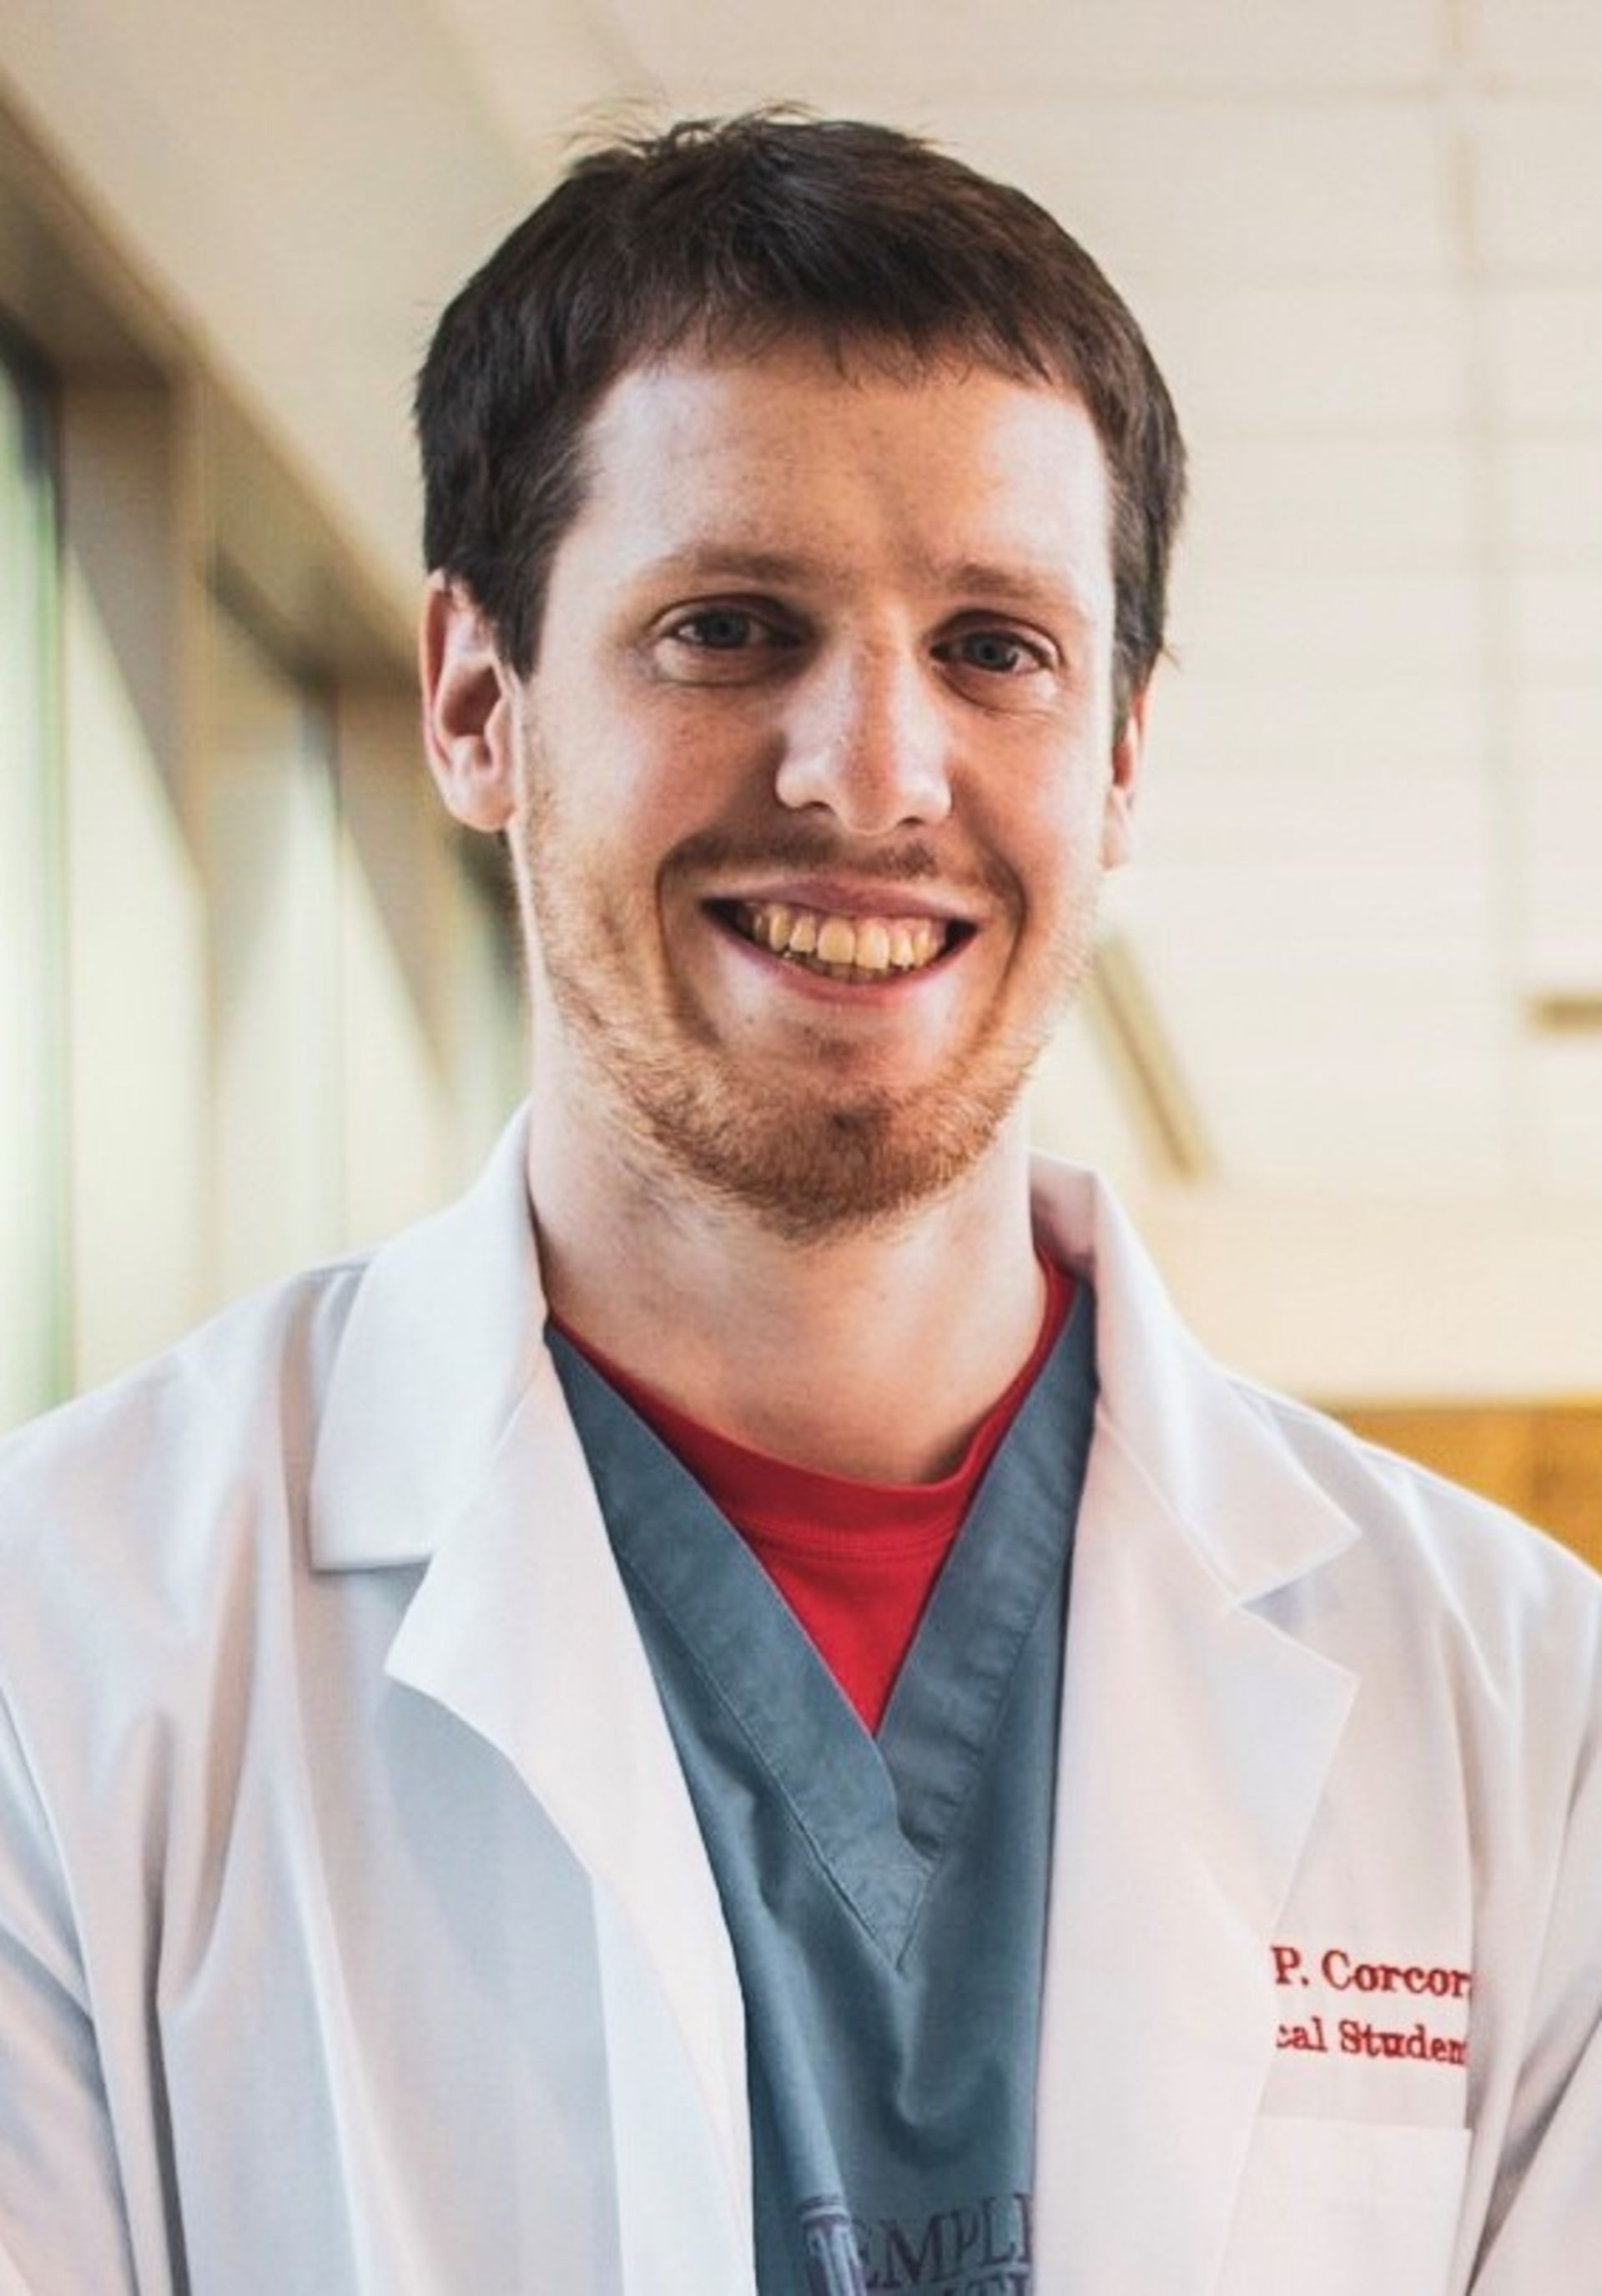 Joe Corcoran, a fourth-year medical student at LKSOM